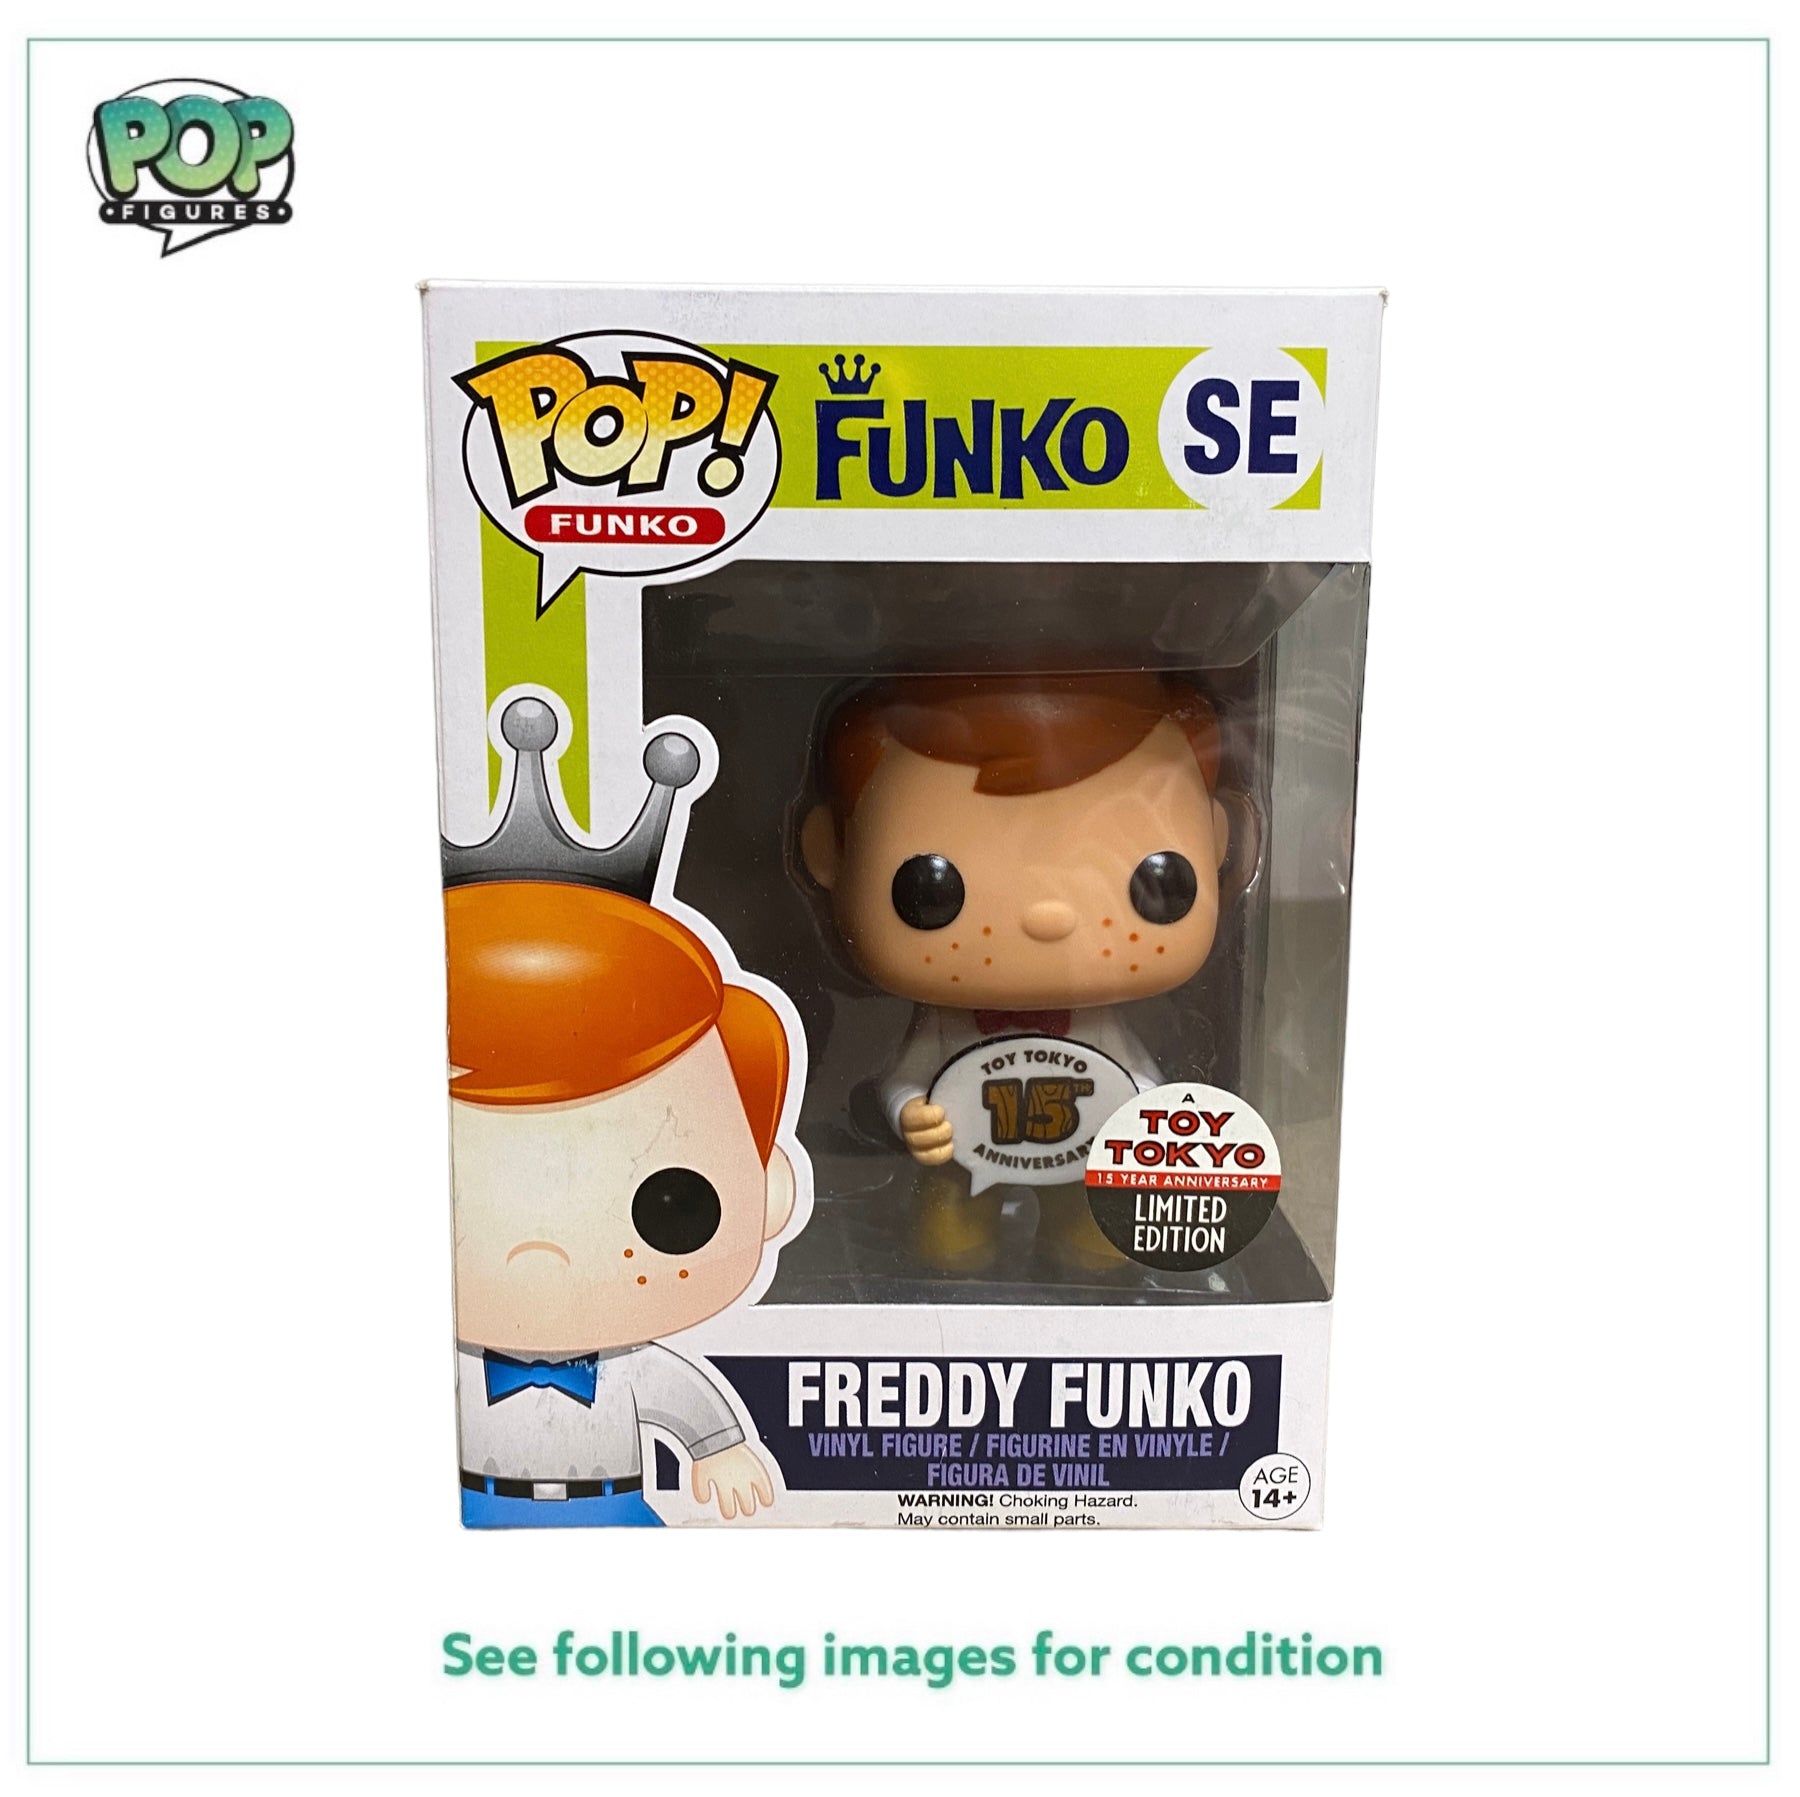 Freddy Funko Toy Tokyo 15th Anniversary Funko Pop! - Toy Tokyo Exclusive - Condition 7.5/10